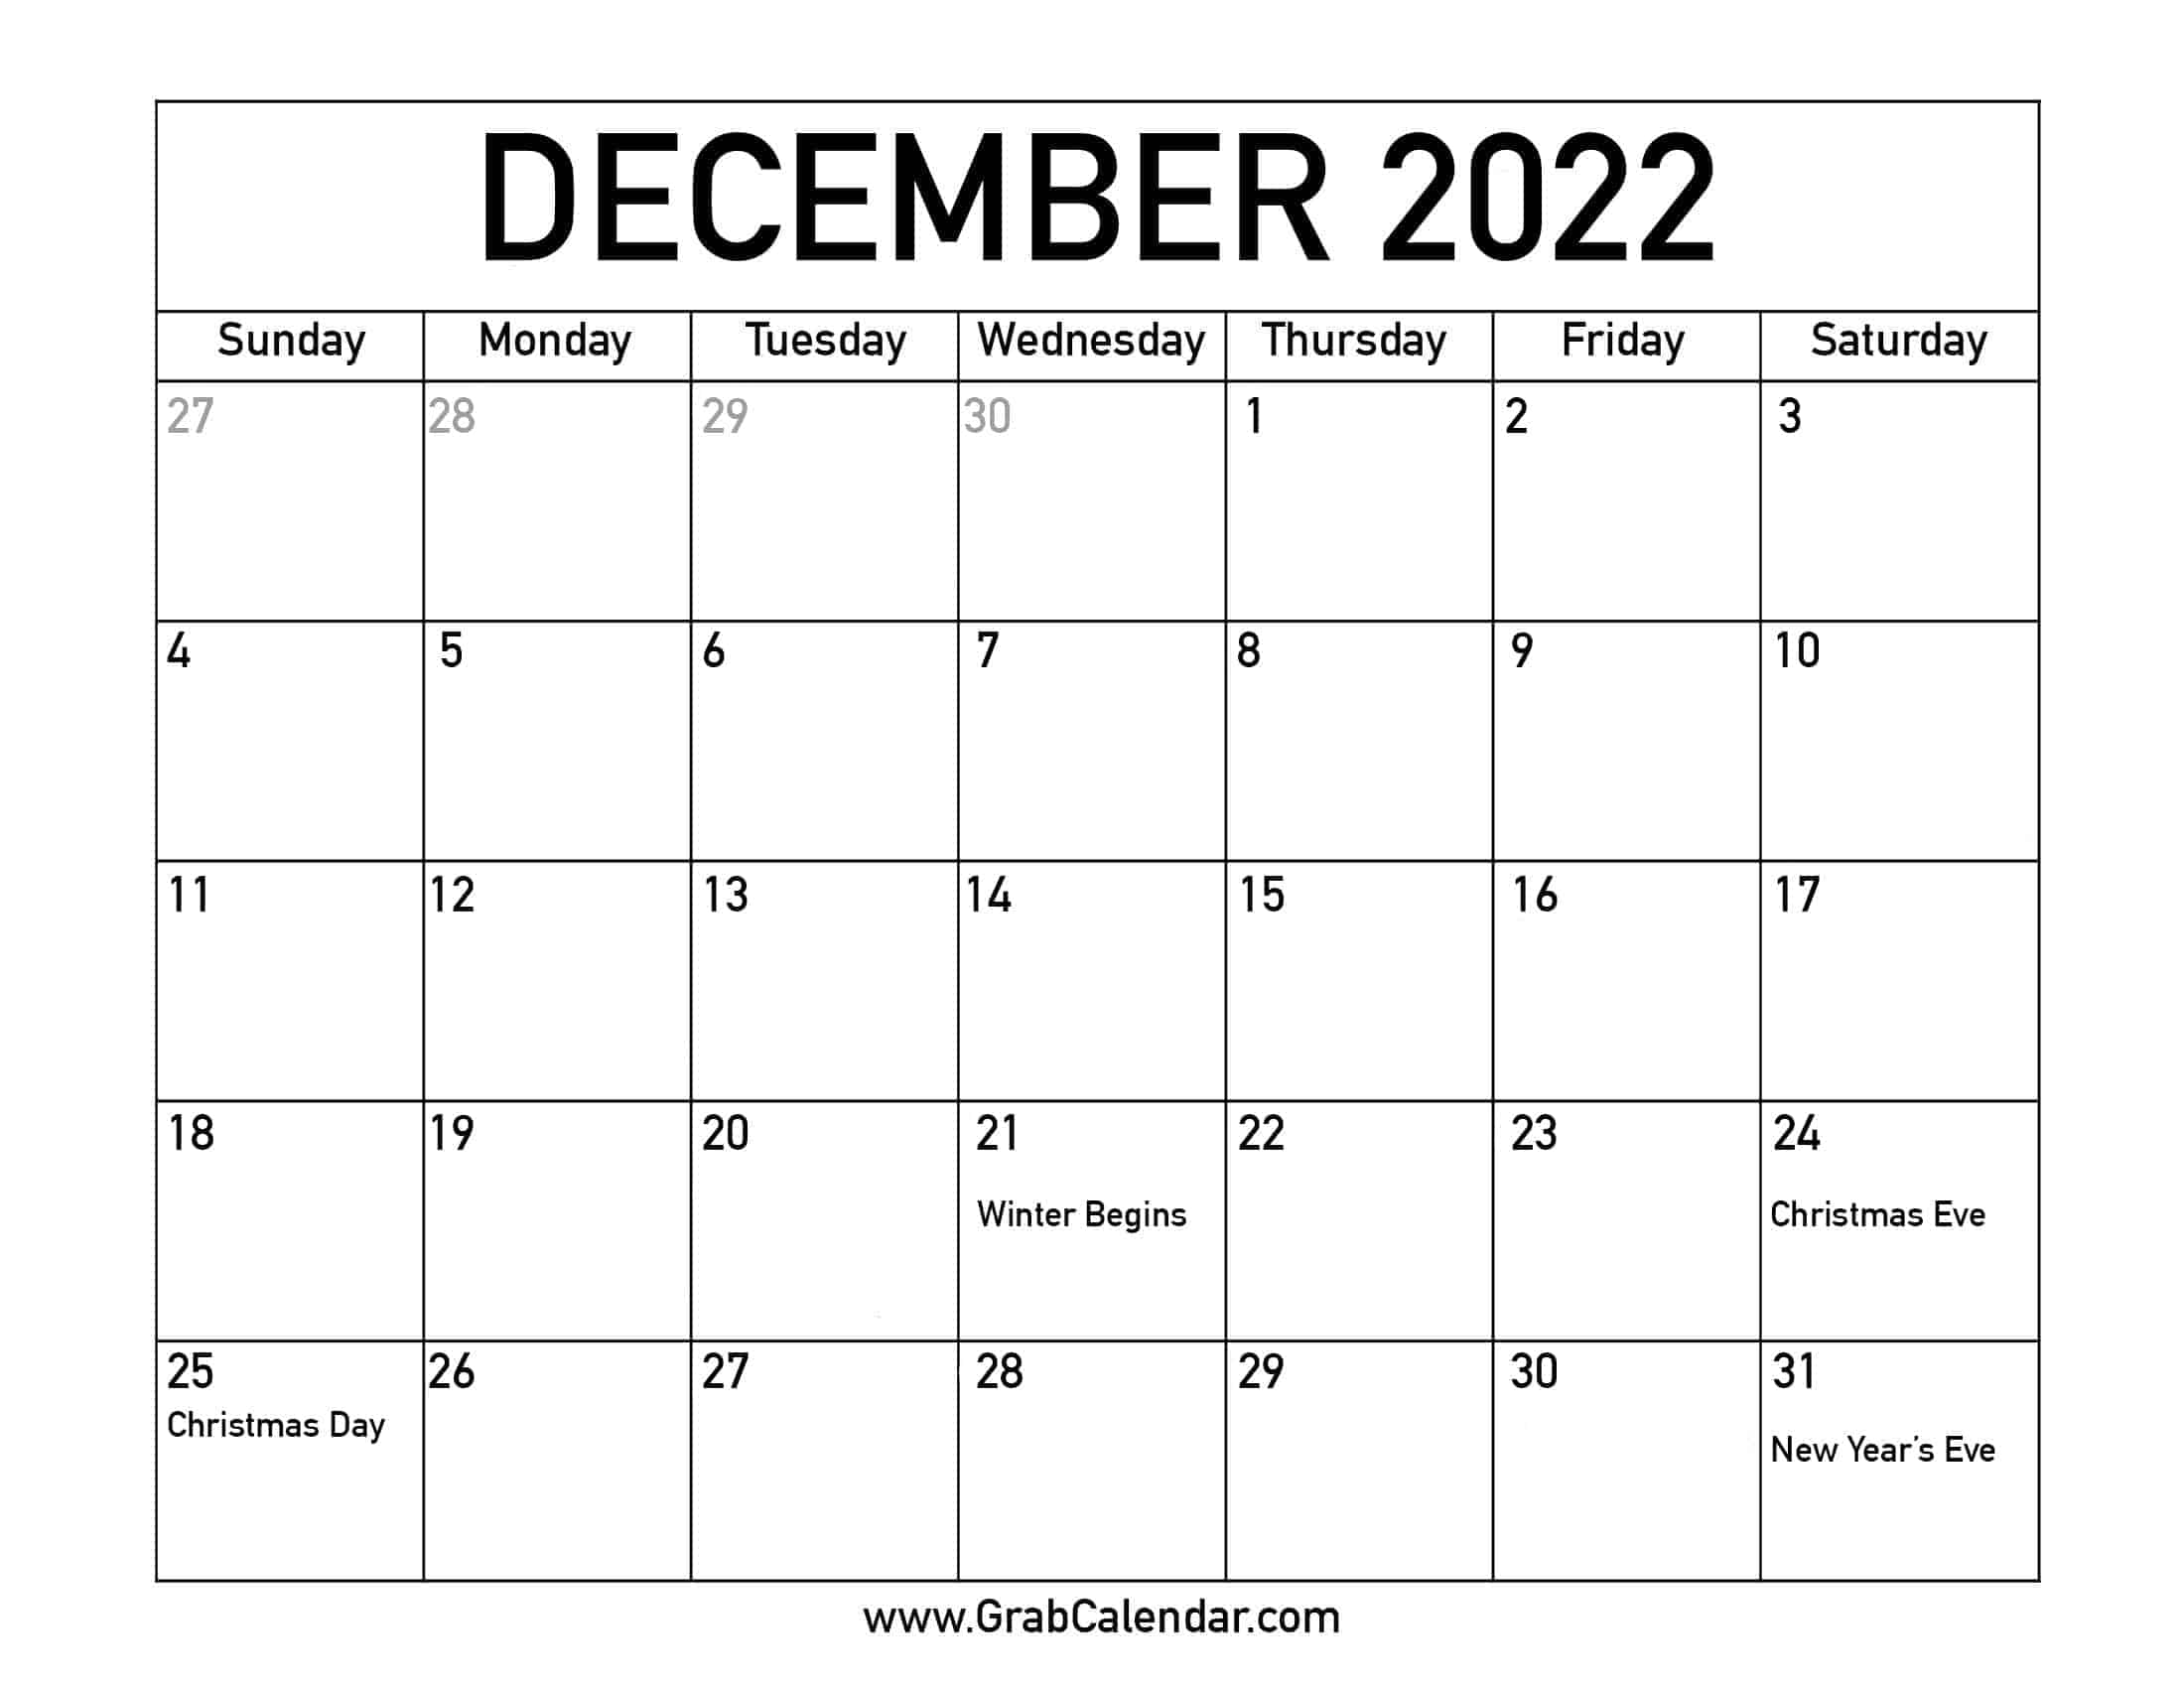 December 2022 Calendar Holidays Printable December 2022 Calendar